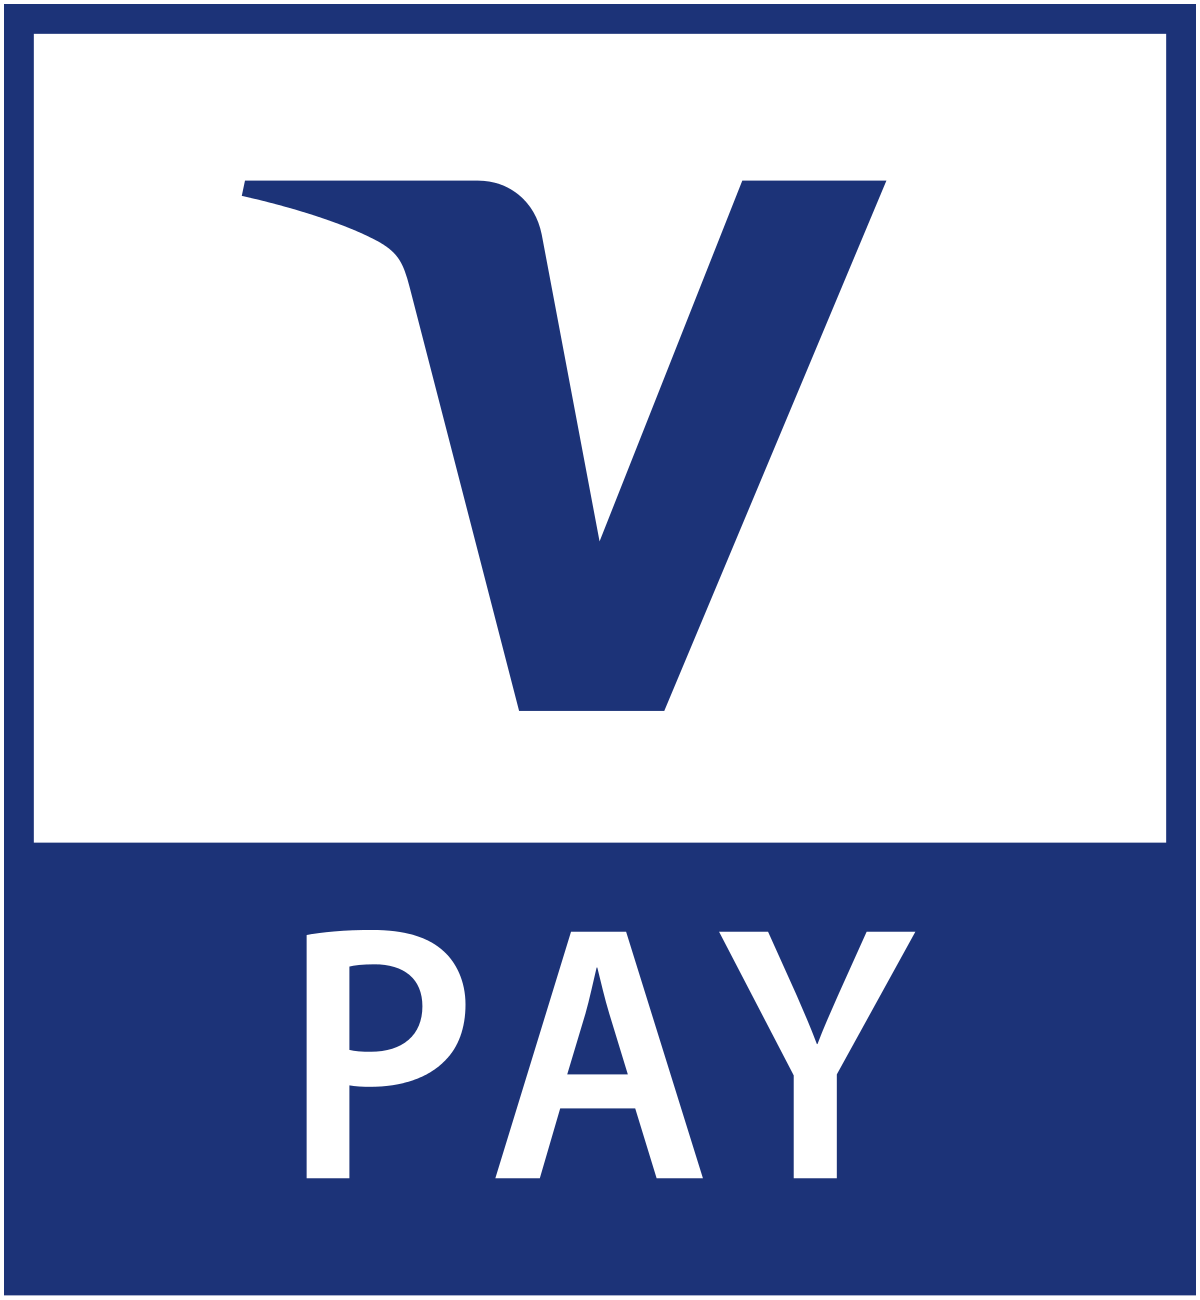 VPay_logo_2015.svg